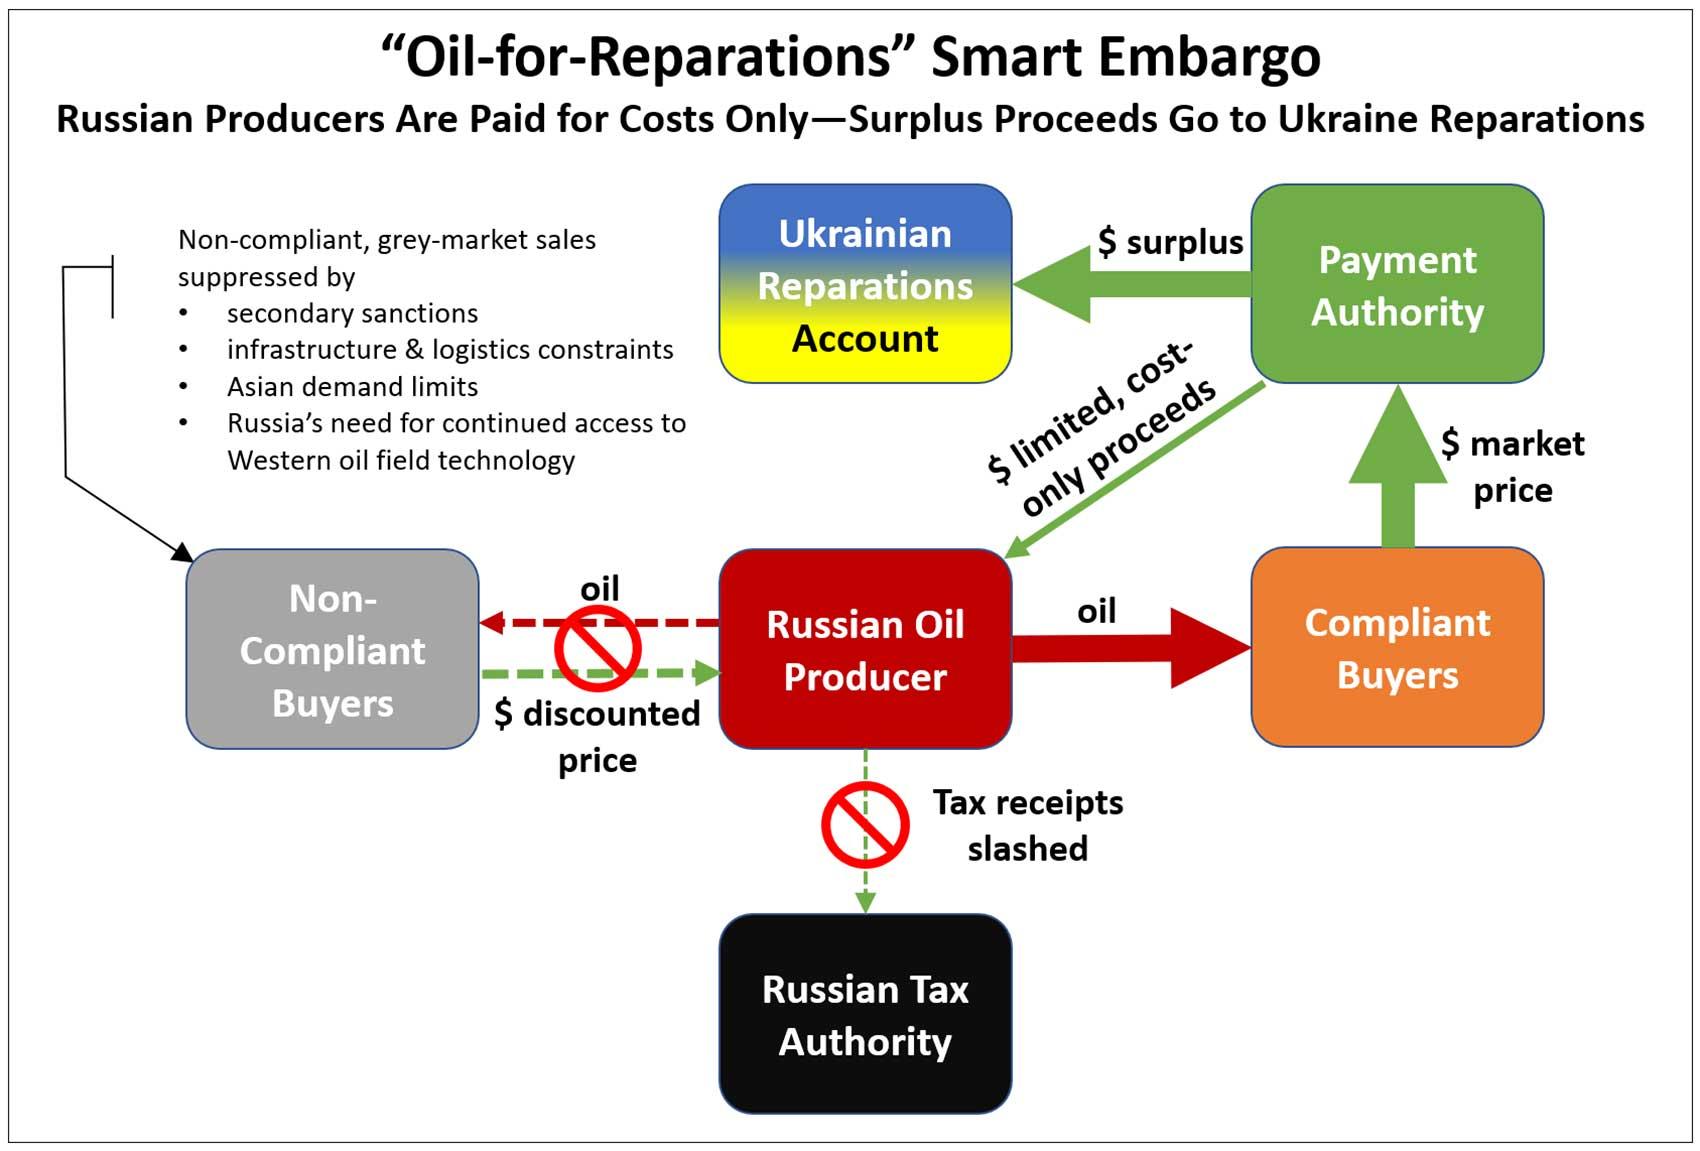 "Oil-for-Reparations" Smart Embargo